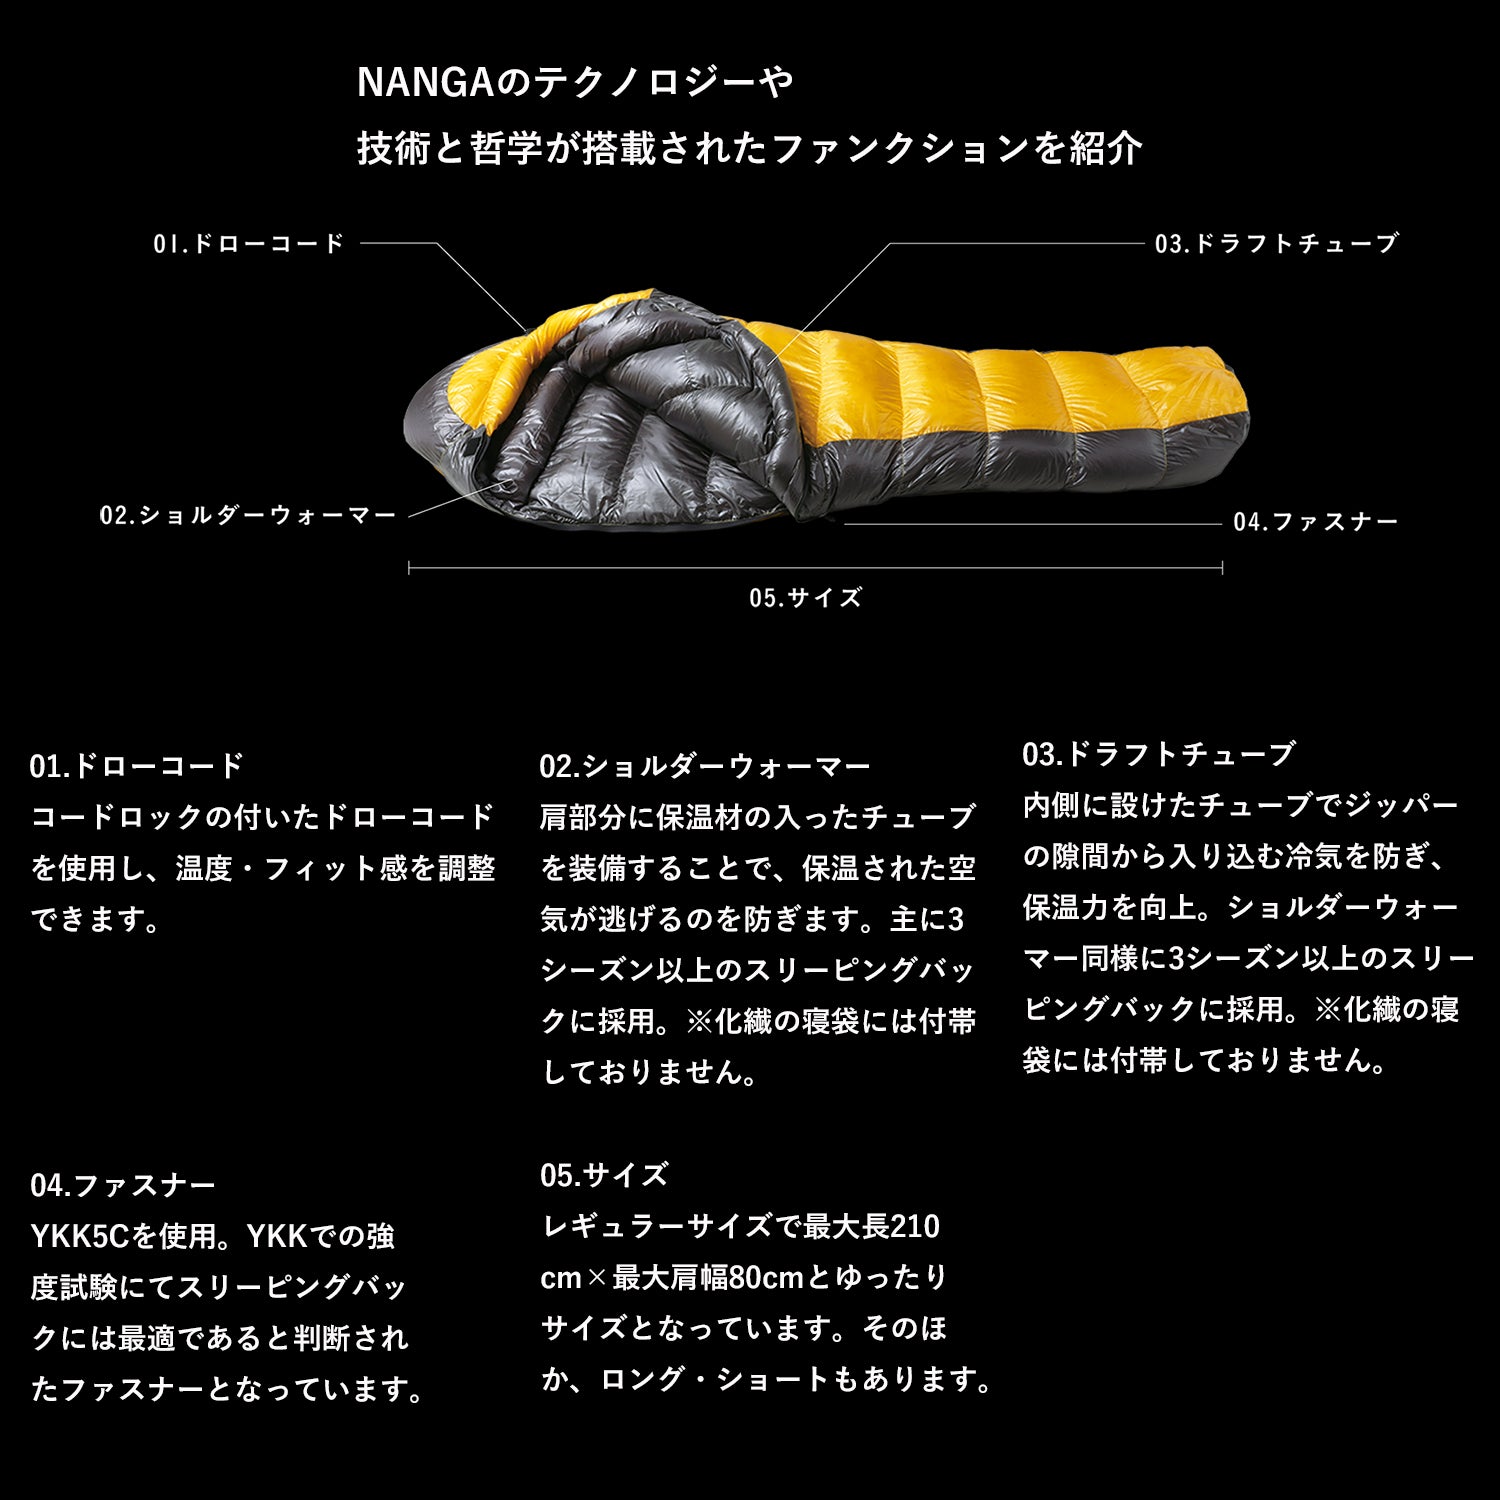 UDD BAG 380DX – NANGA ONLINE SHOP